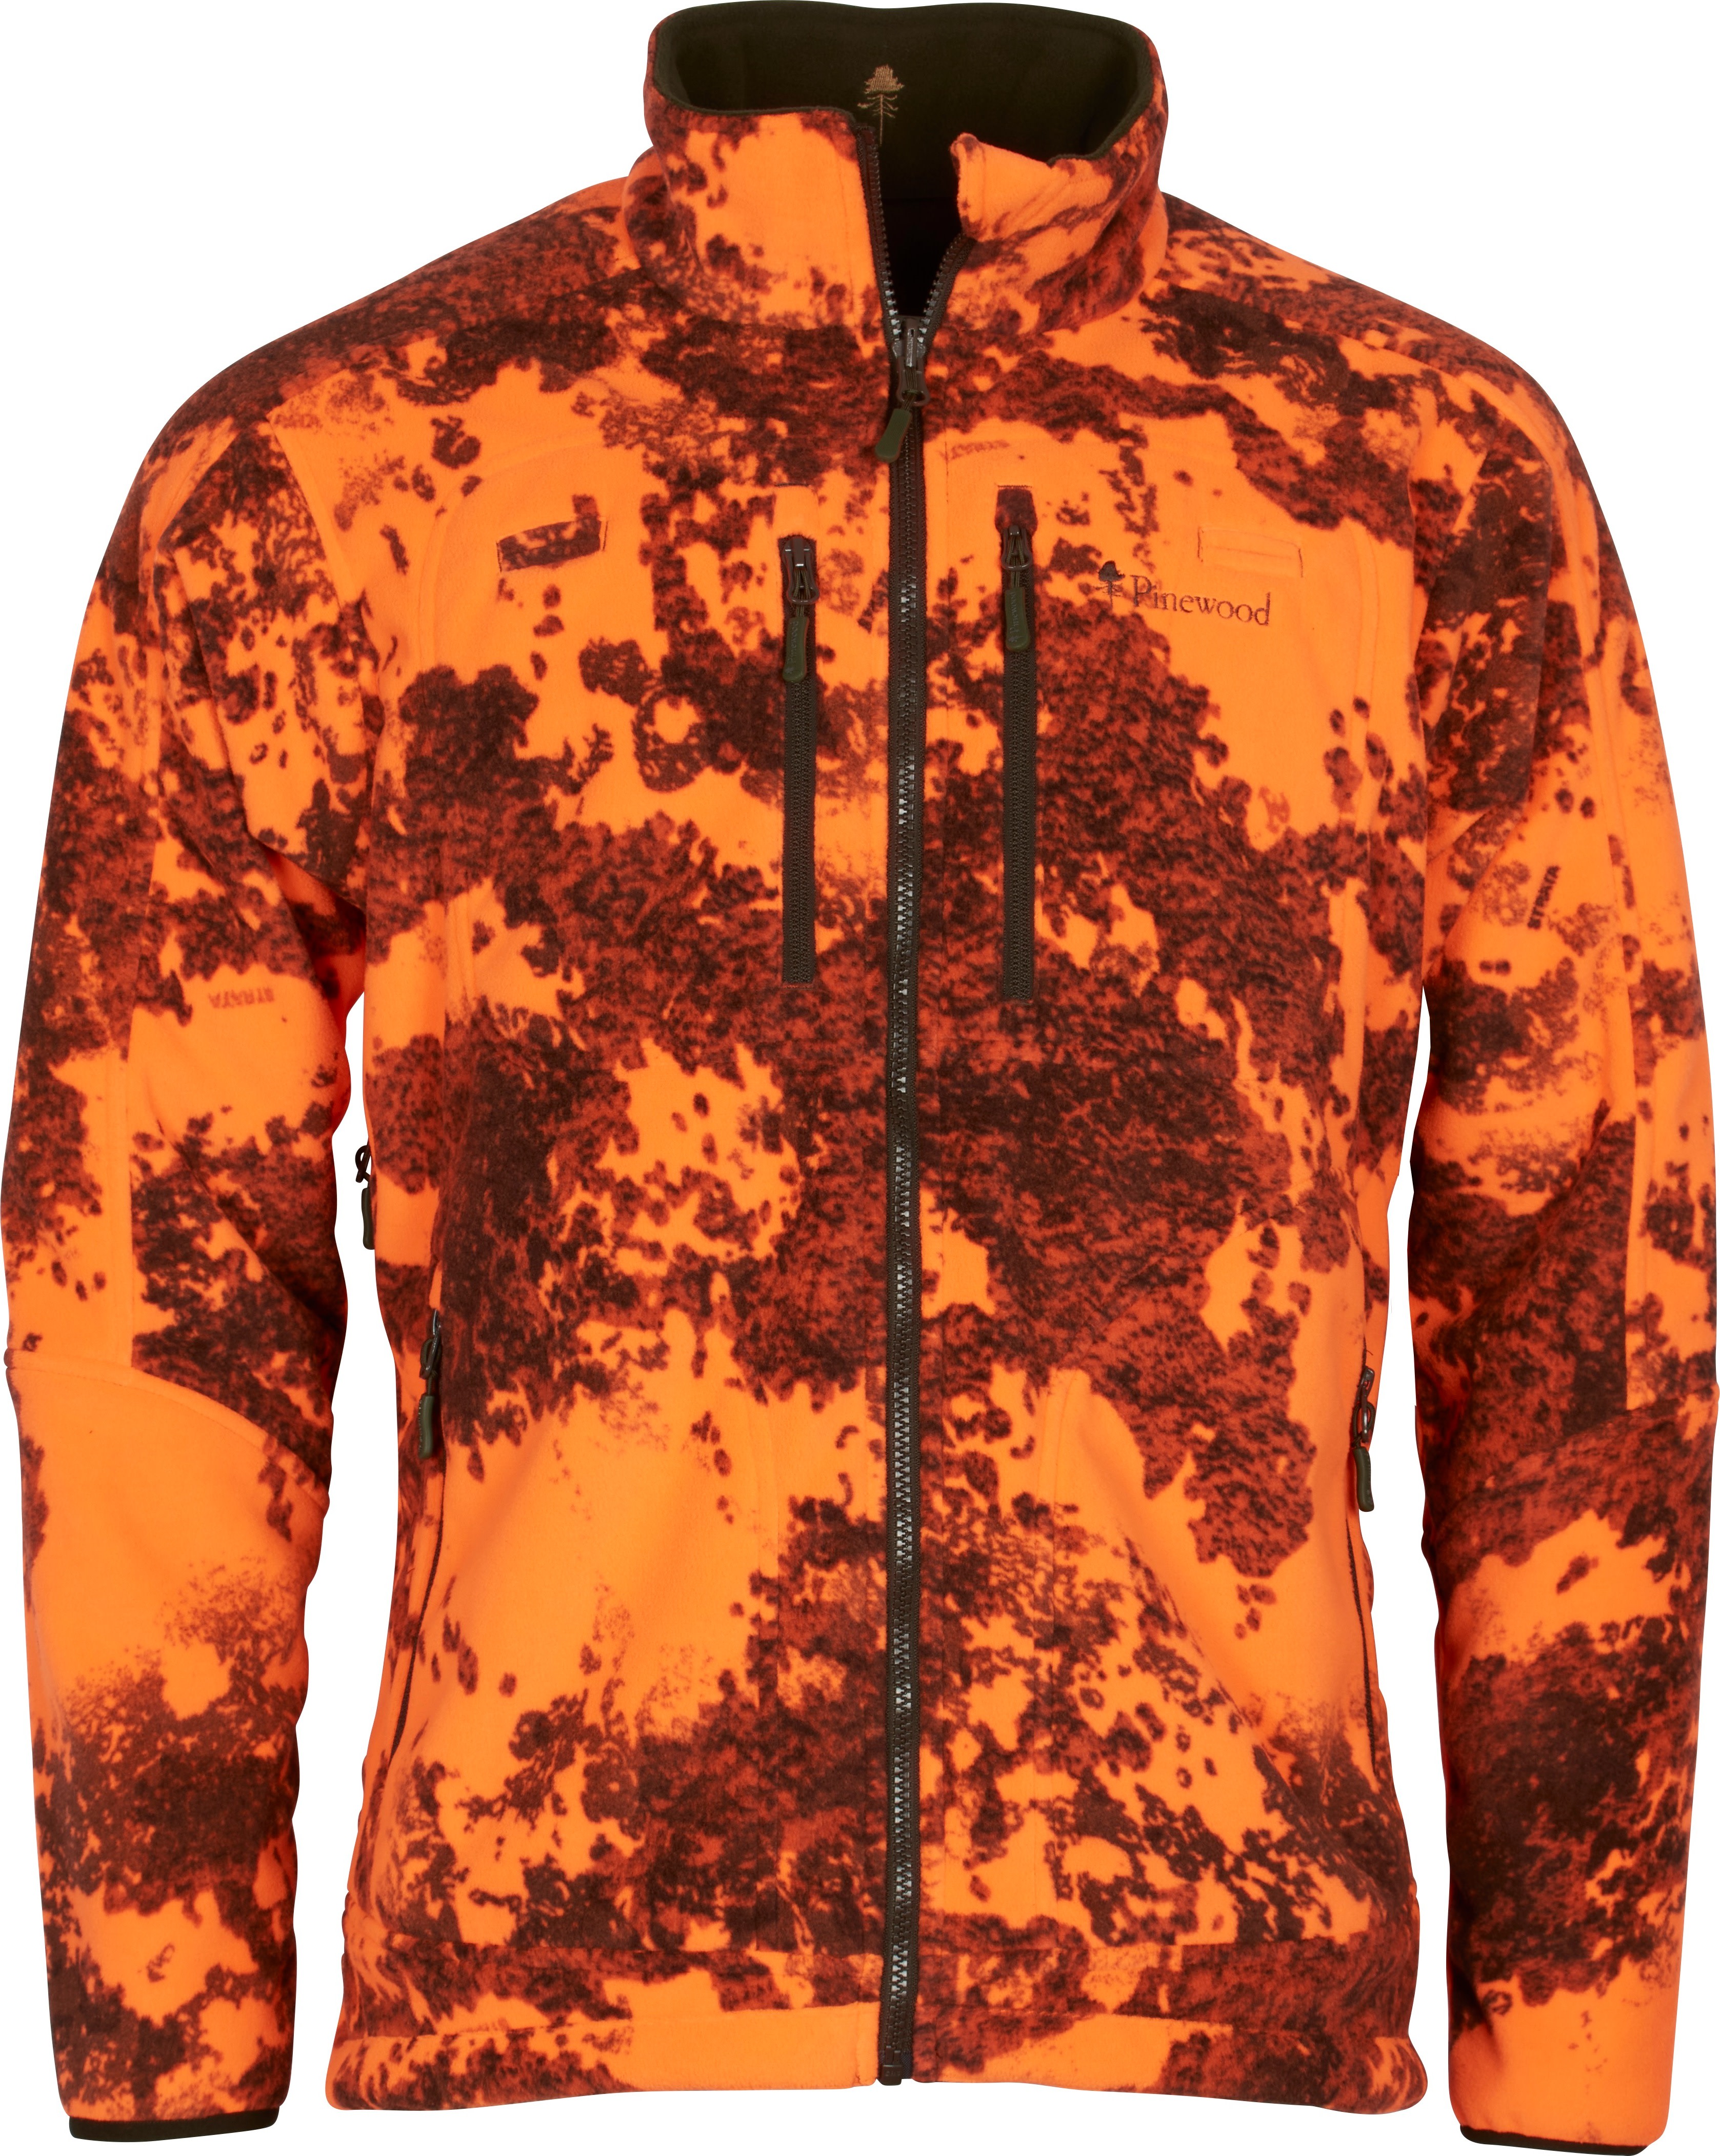 Pinewood Men’s Furudal Reversible Camou Fleece Jacket Hunting Brown/Strata Blaze